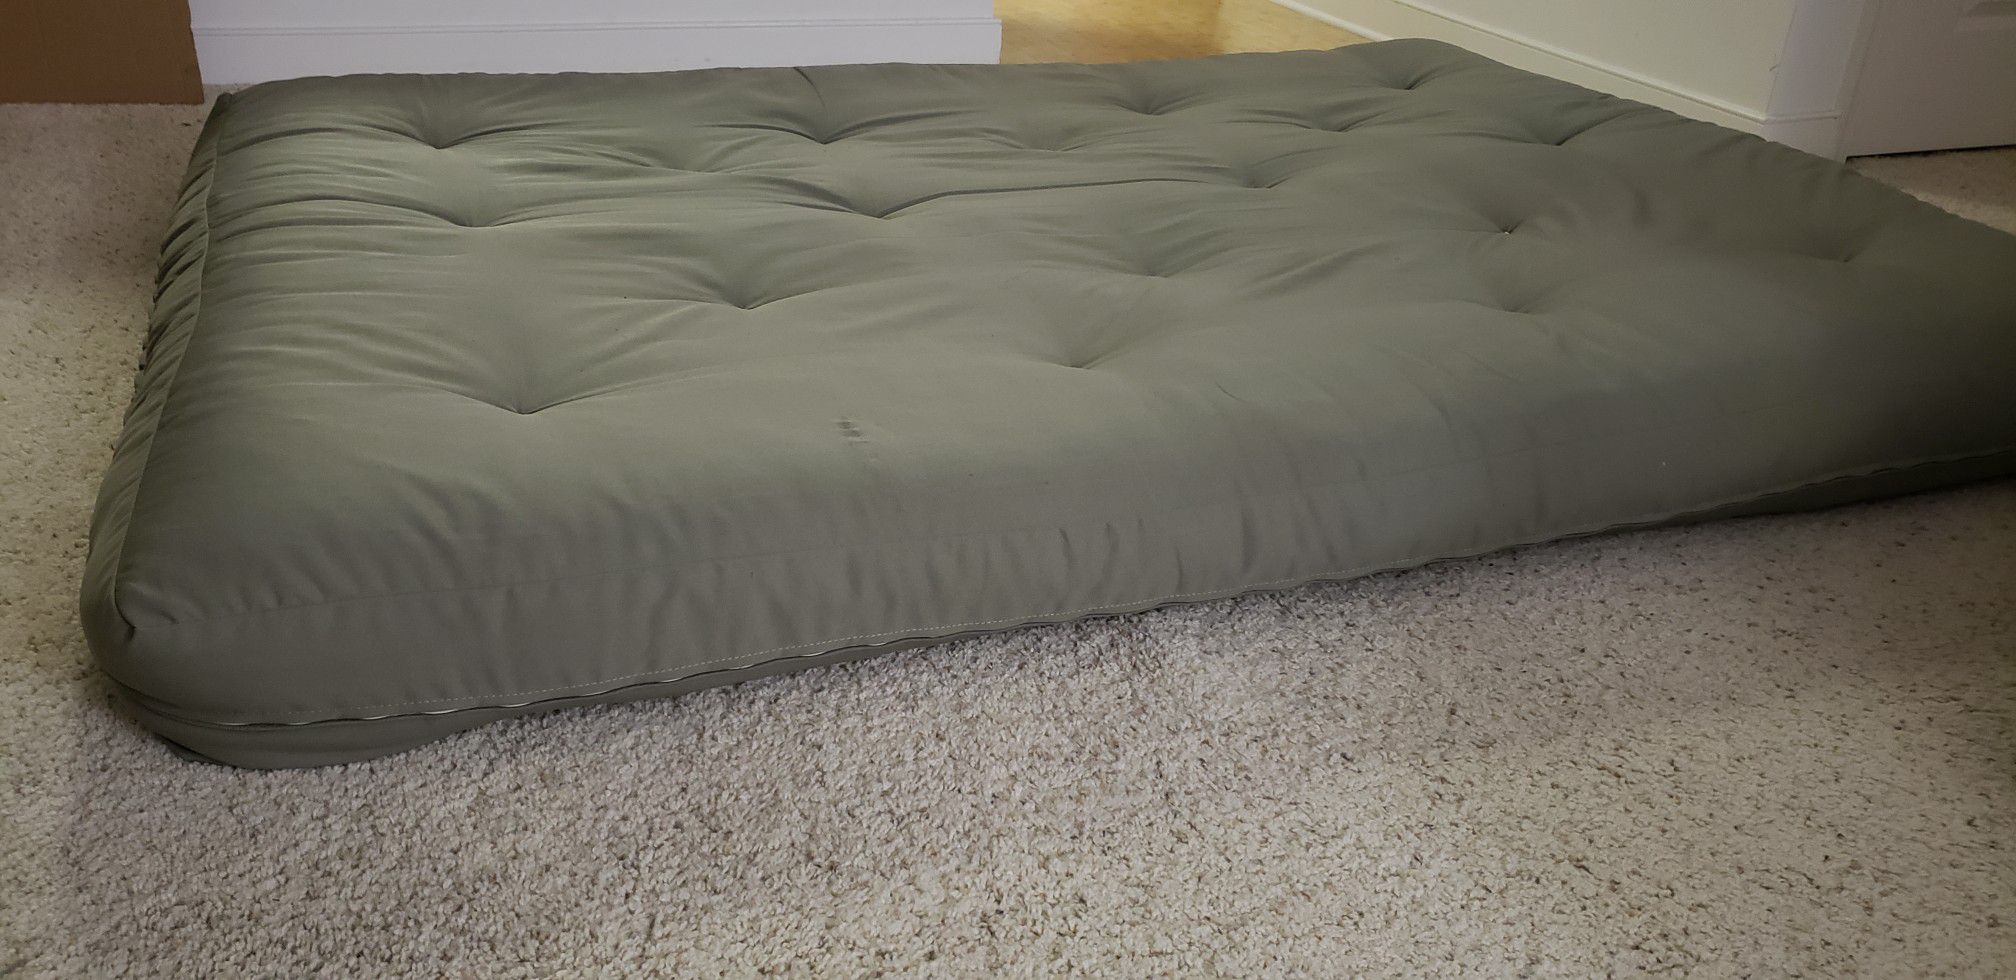 Queen size futon mattress